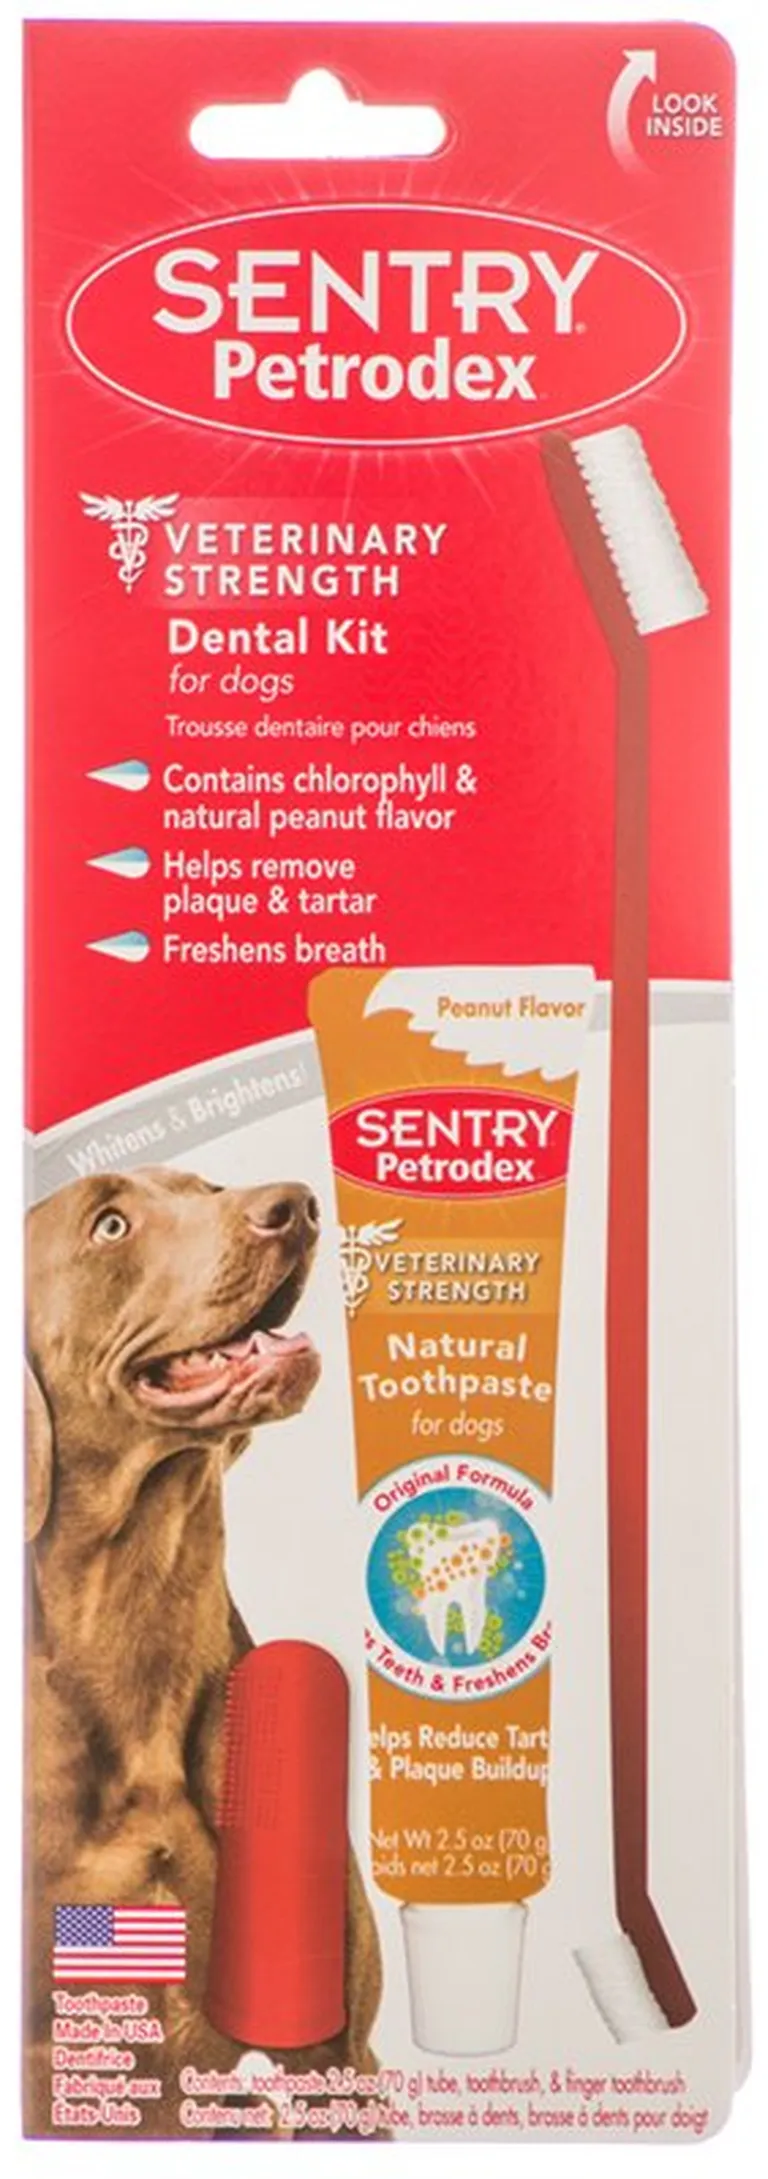 Petrodex Dental Kit for Dogs - Peanut Butter Flavor Photo 1